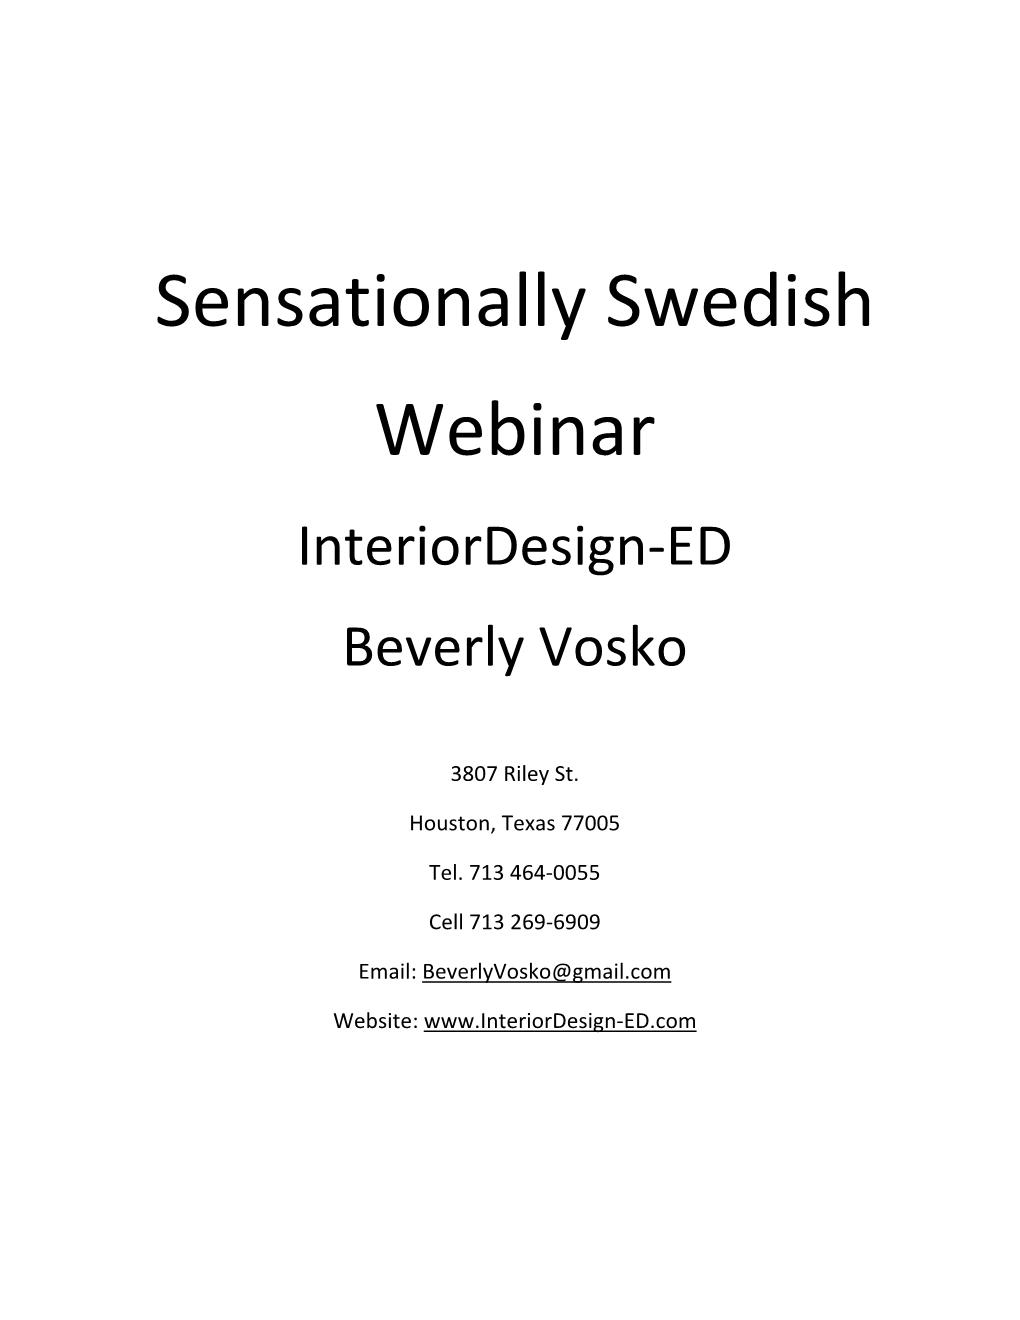 Sensationally Swedish Webinar Interiordesign-ED Beverly Vosko